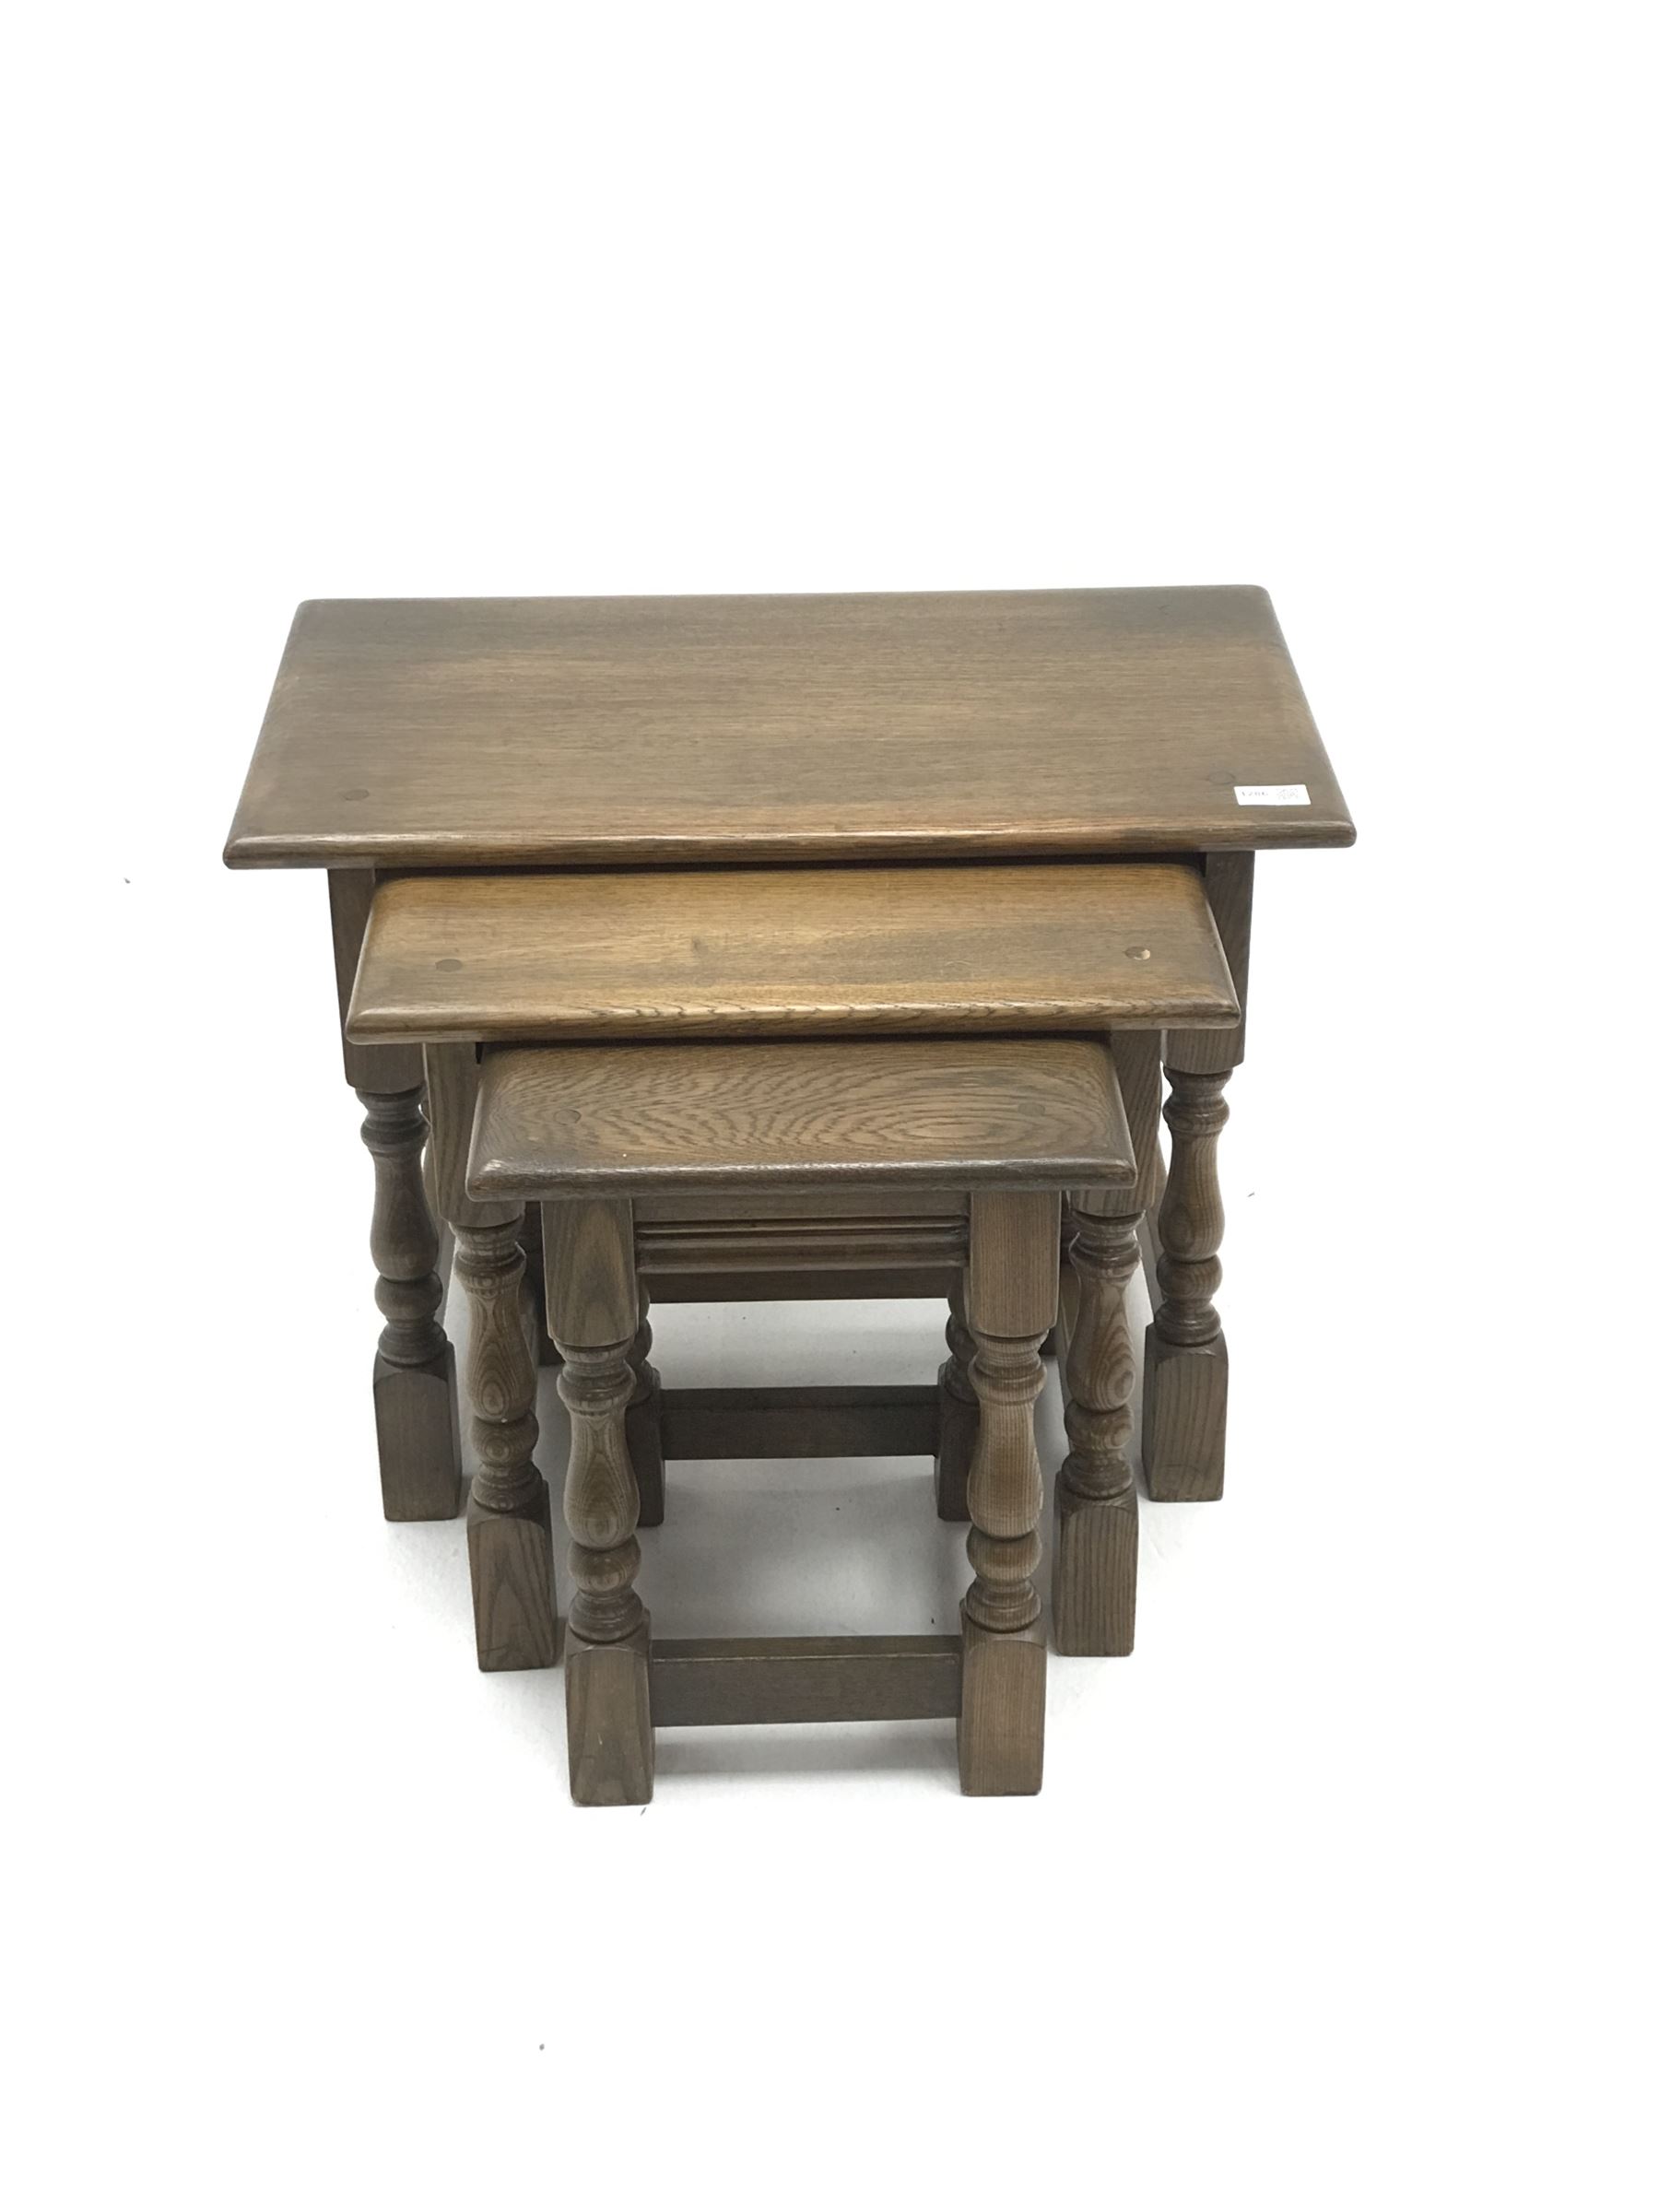 Medium oak nest of three Joint style tables - Image 2 of 3